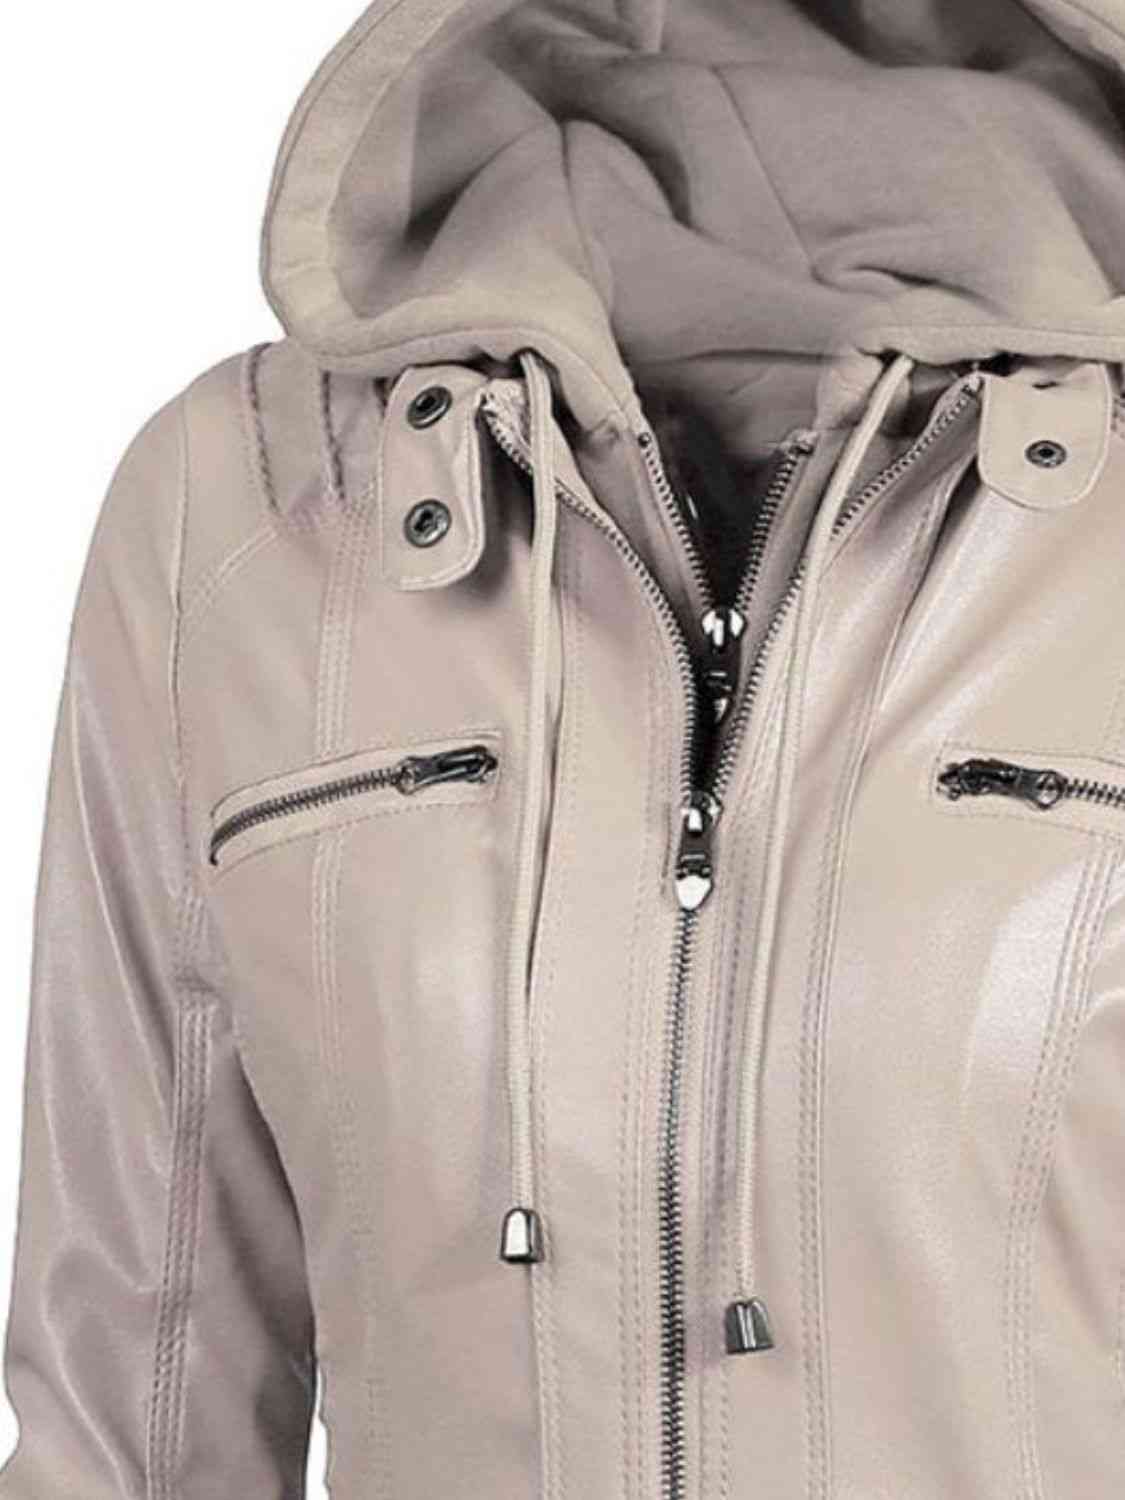 Full Size Zip-Up Hooded PU Jacket